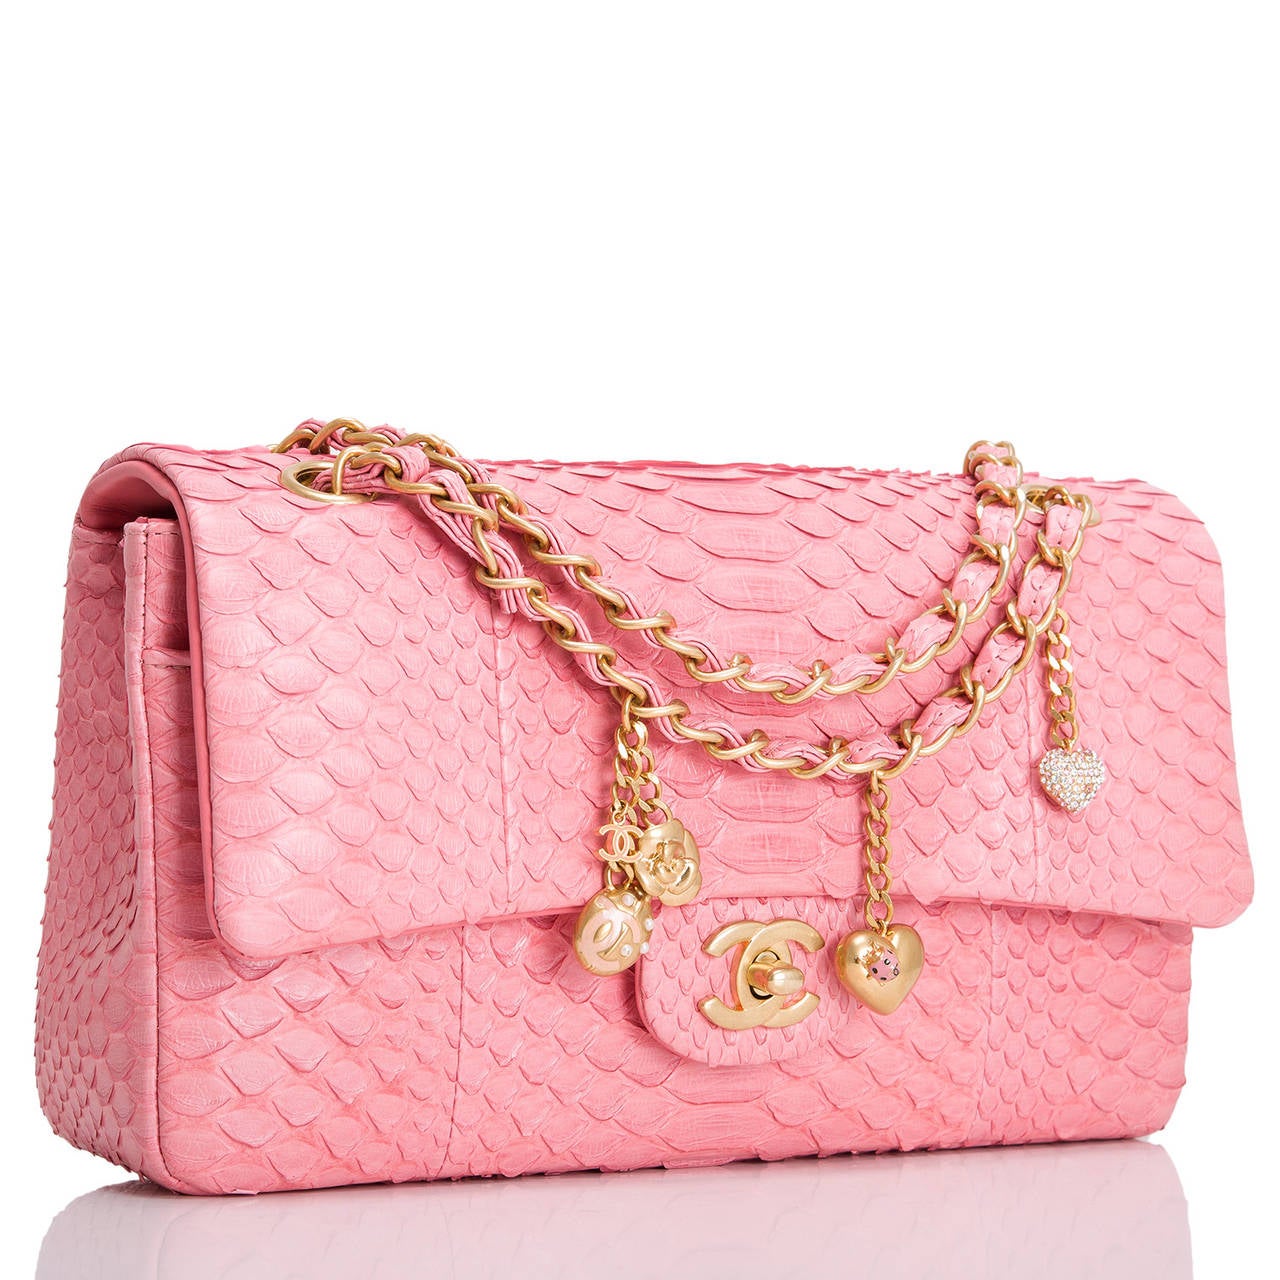 Chanel Pink Python Large Charm Flap Bag